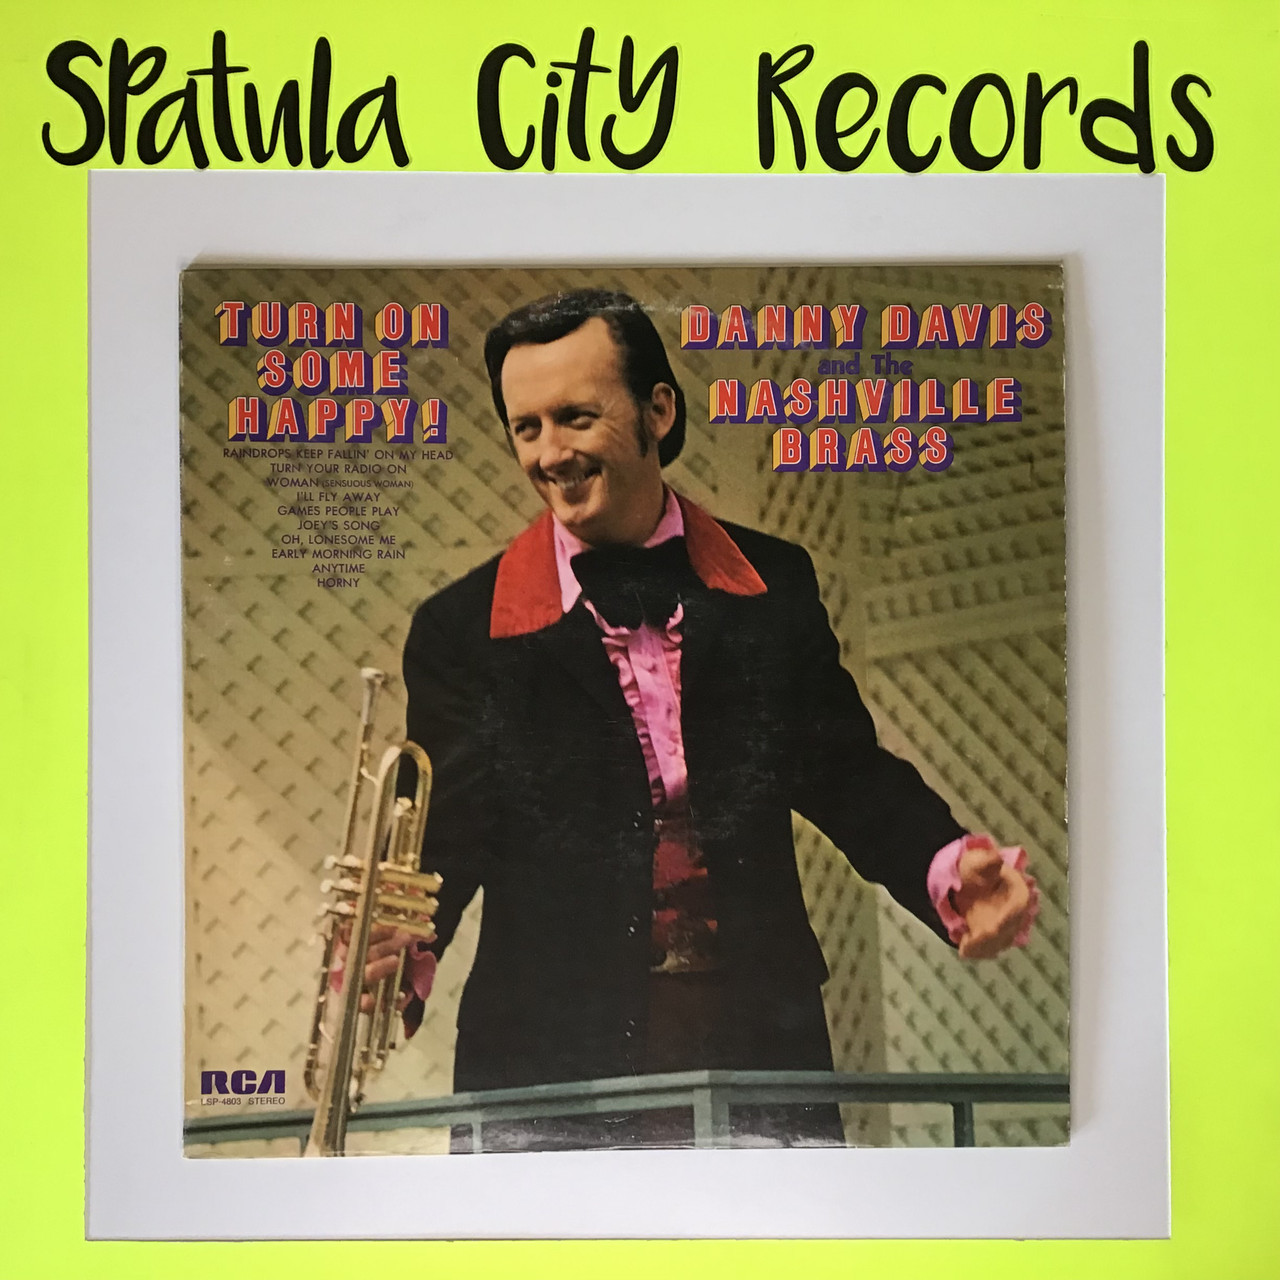 Danny Davis and the Nashville Brass - Turn on Some Happy - vinyl record album LP